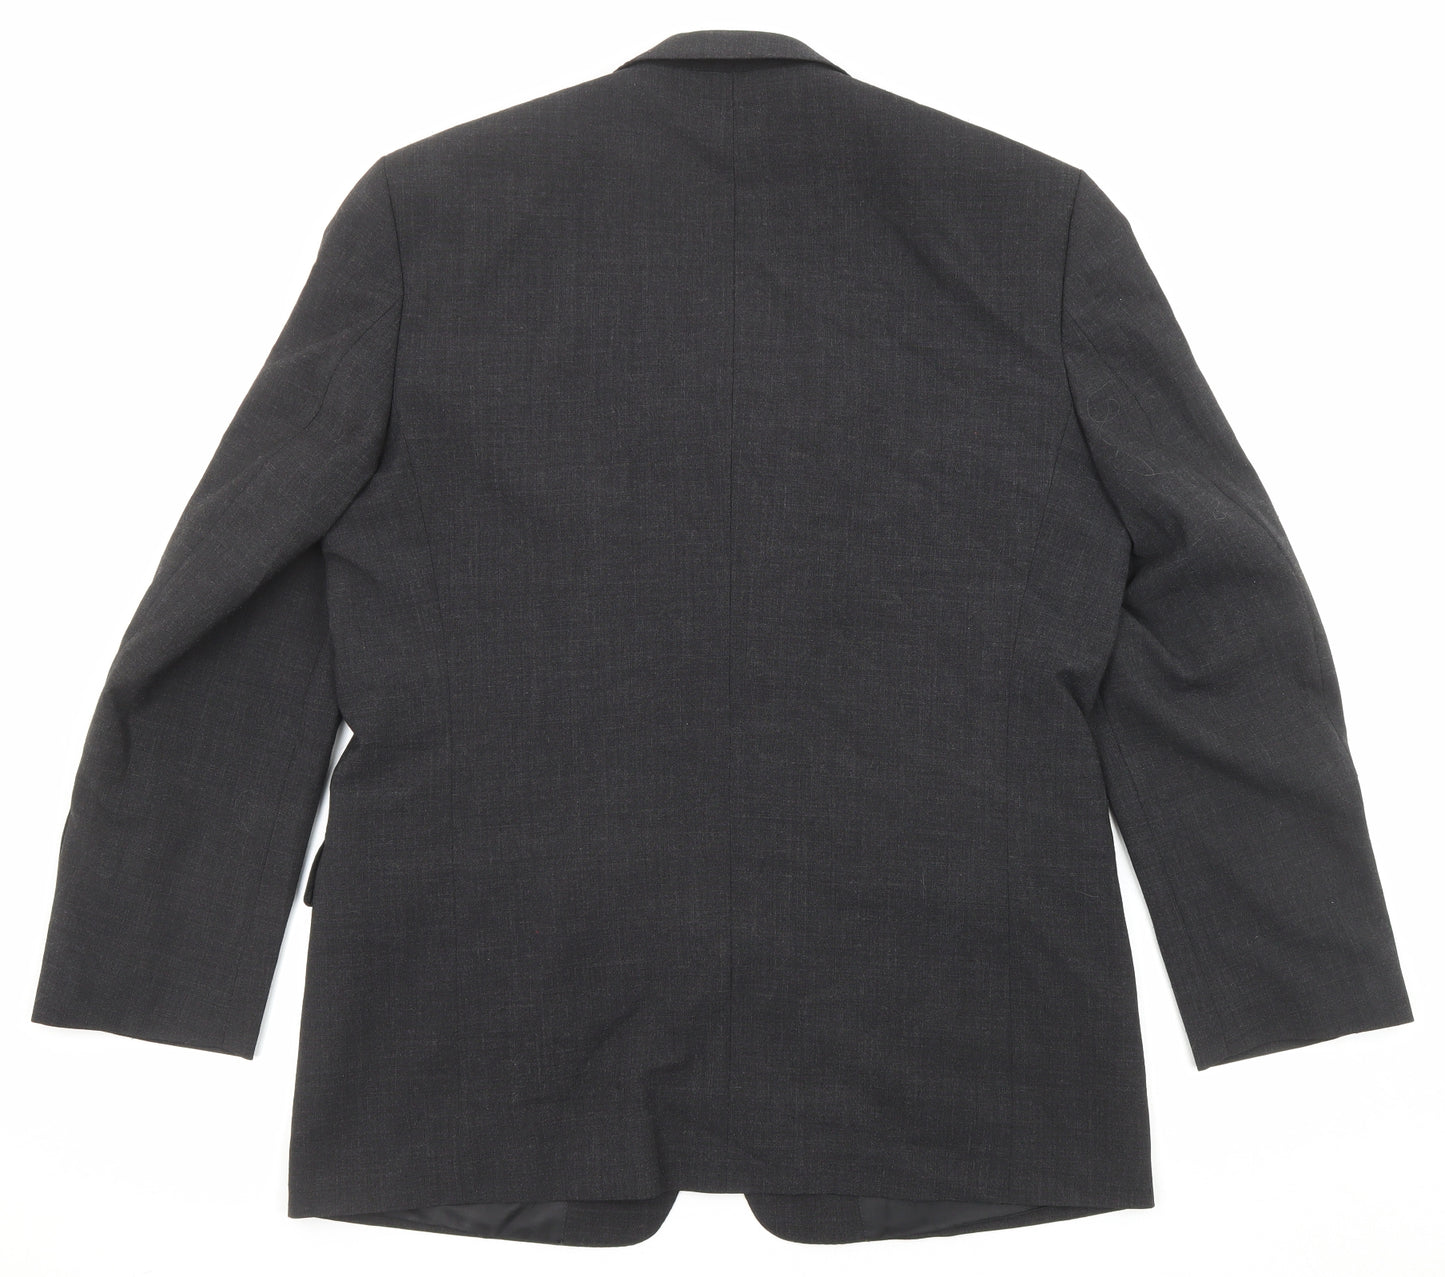 Rohan Mens Grey Polyester Jacket Suit Jacket Size 42 Regular